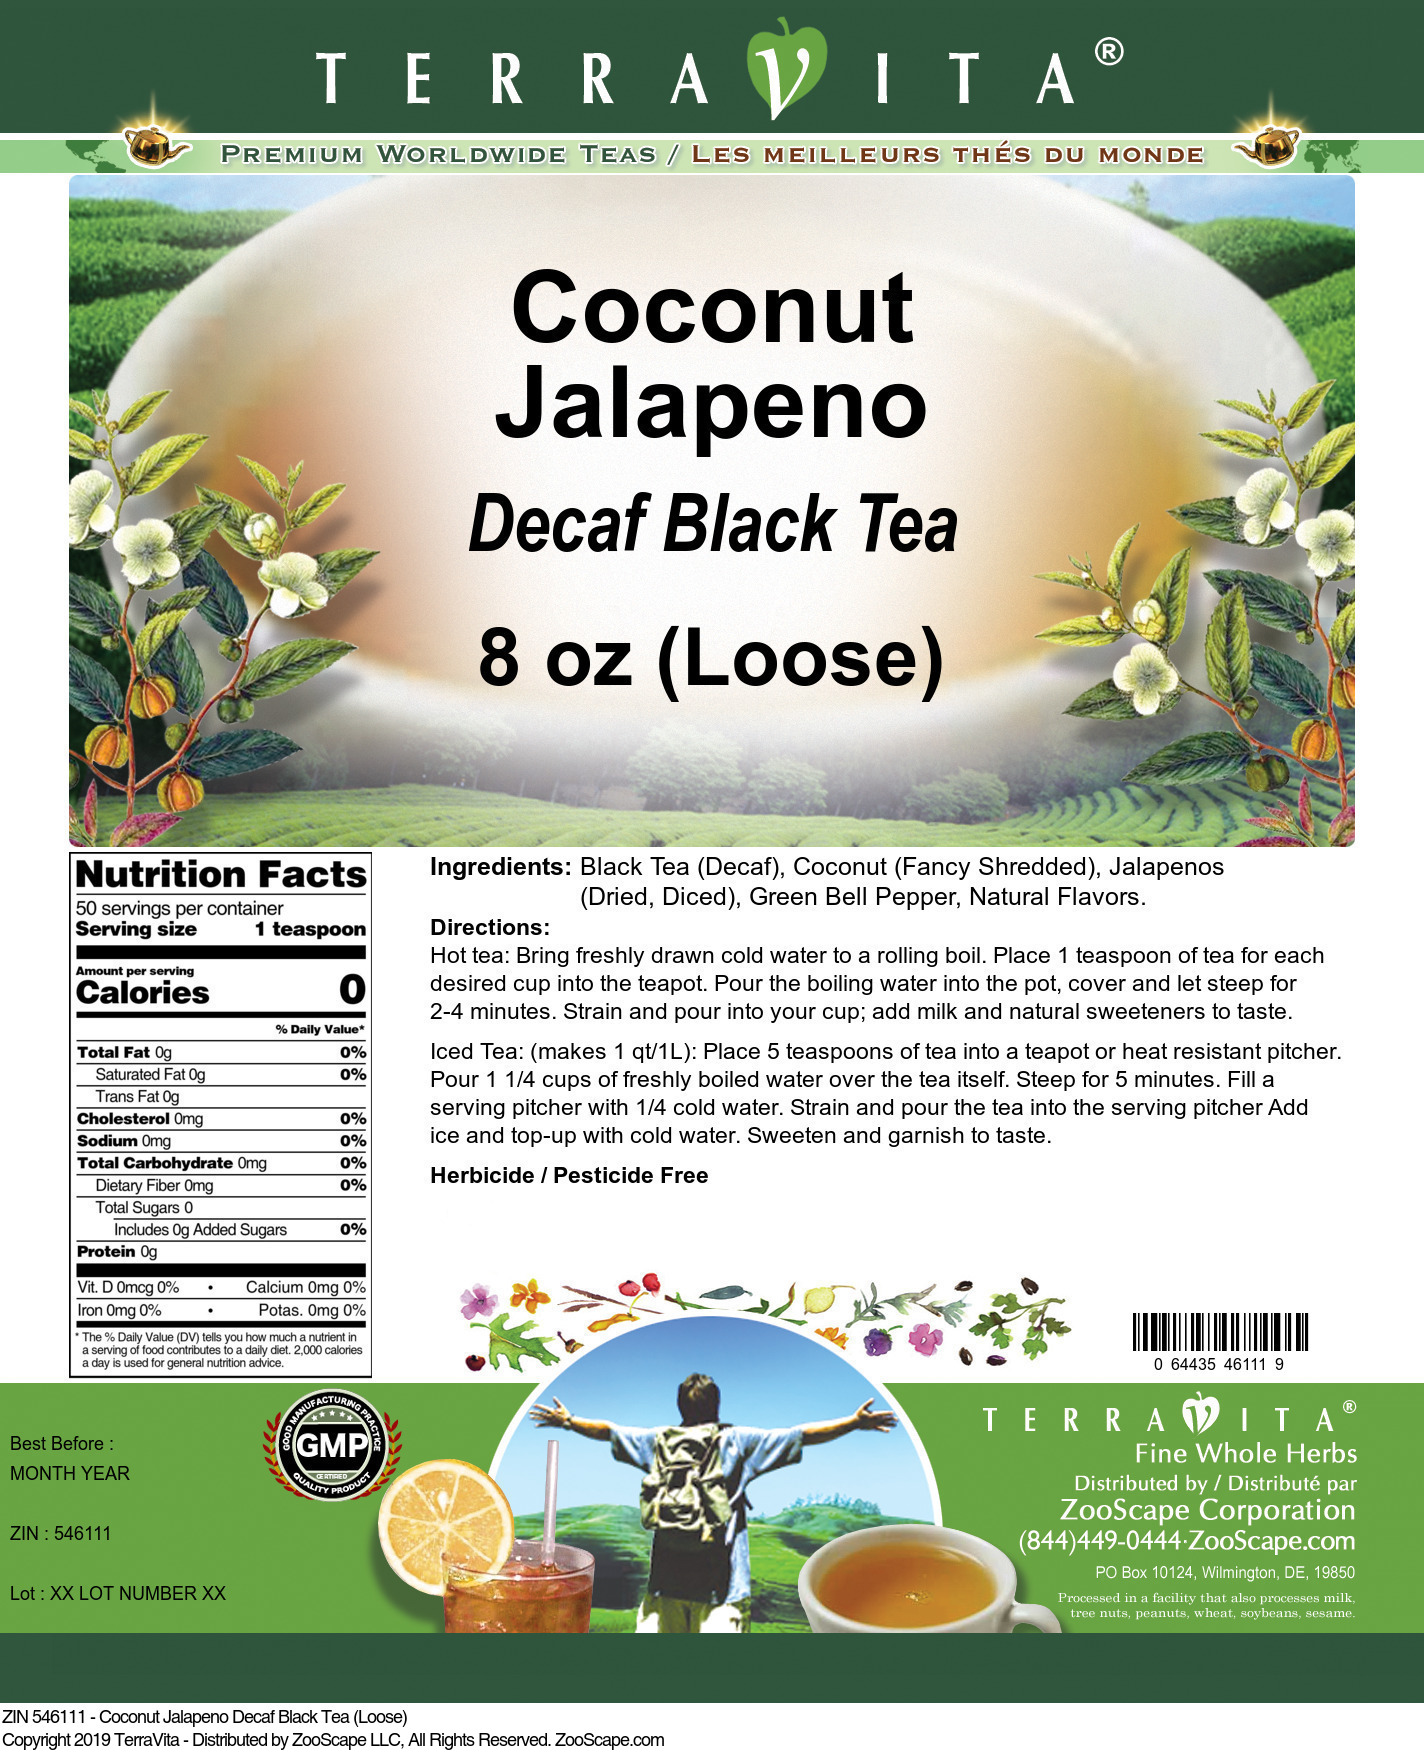 Coconut Jalapeno Decaf Black Tea (Loose) - Label